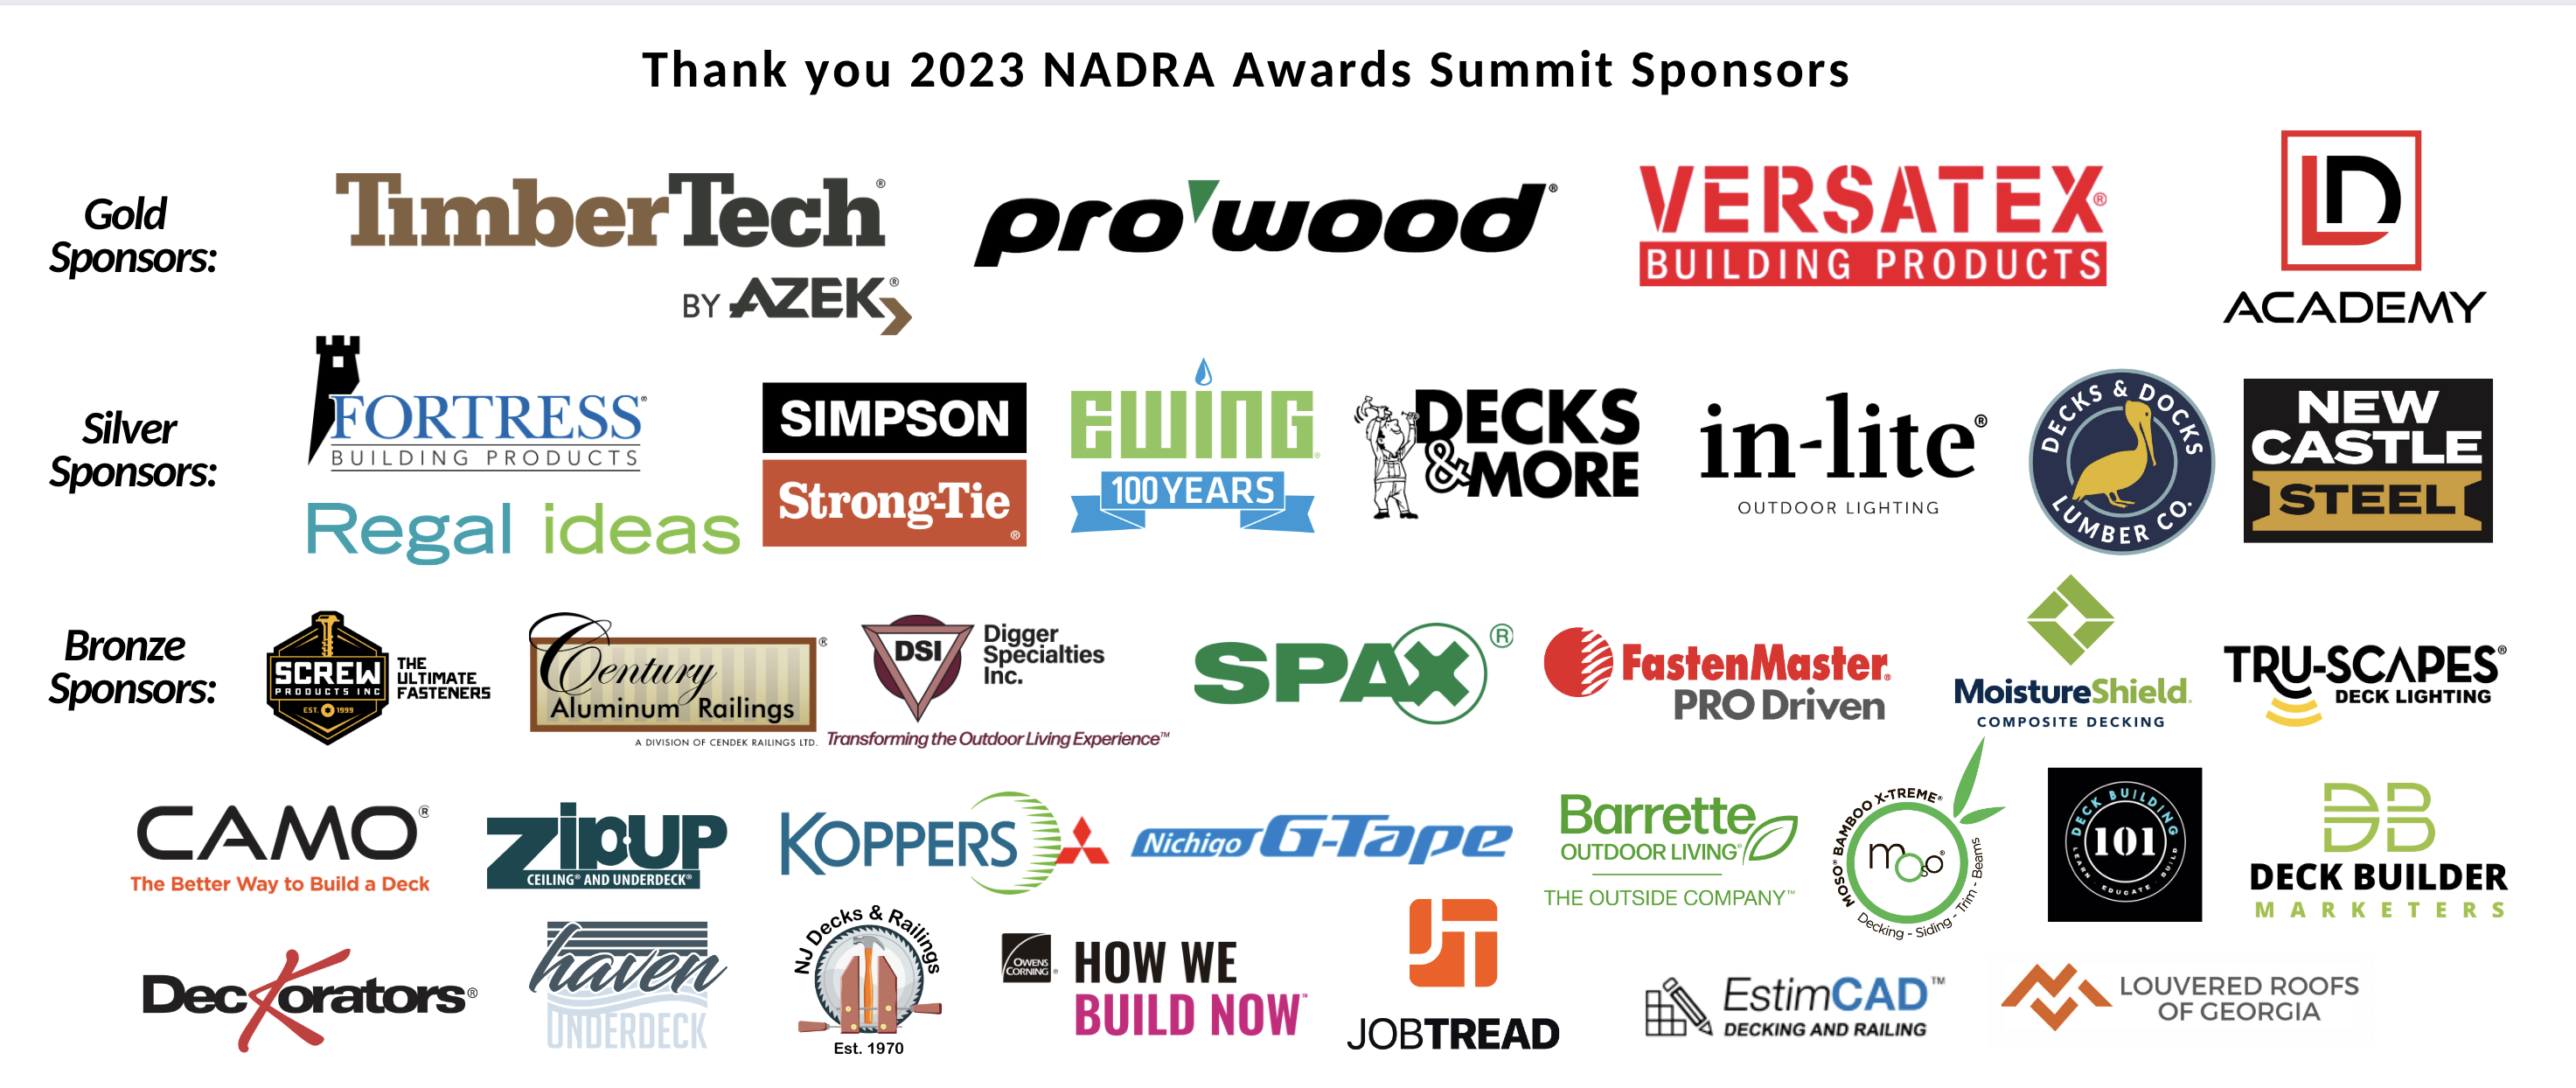 NADRA Awards Summit Sponsors 2023